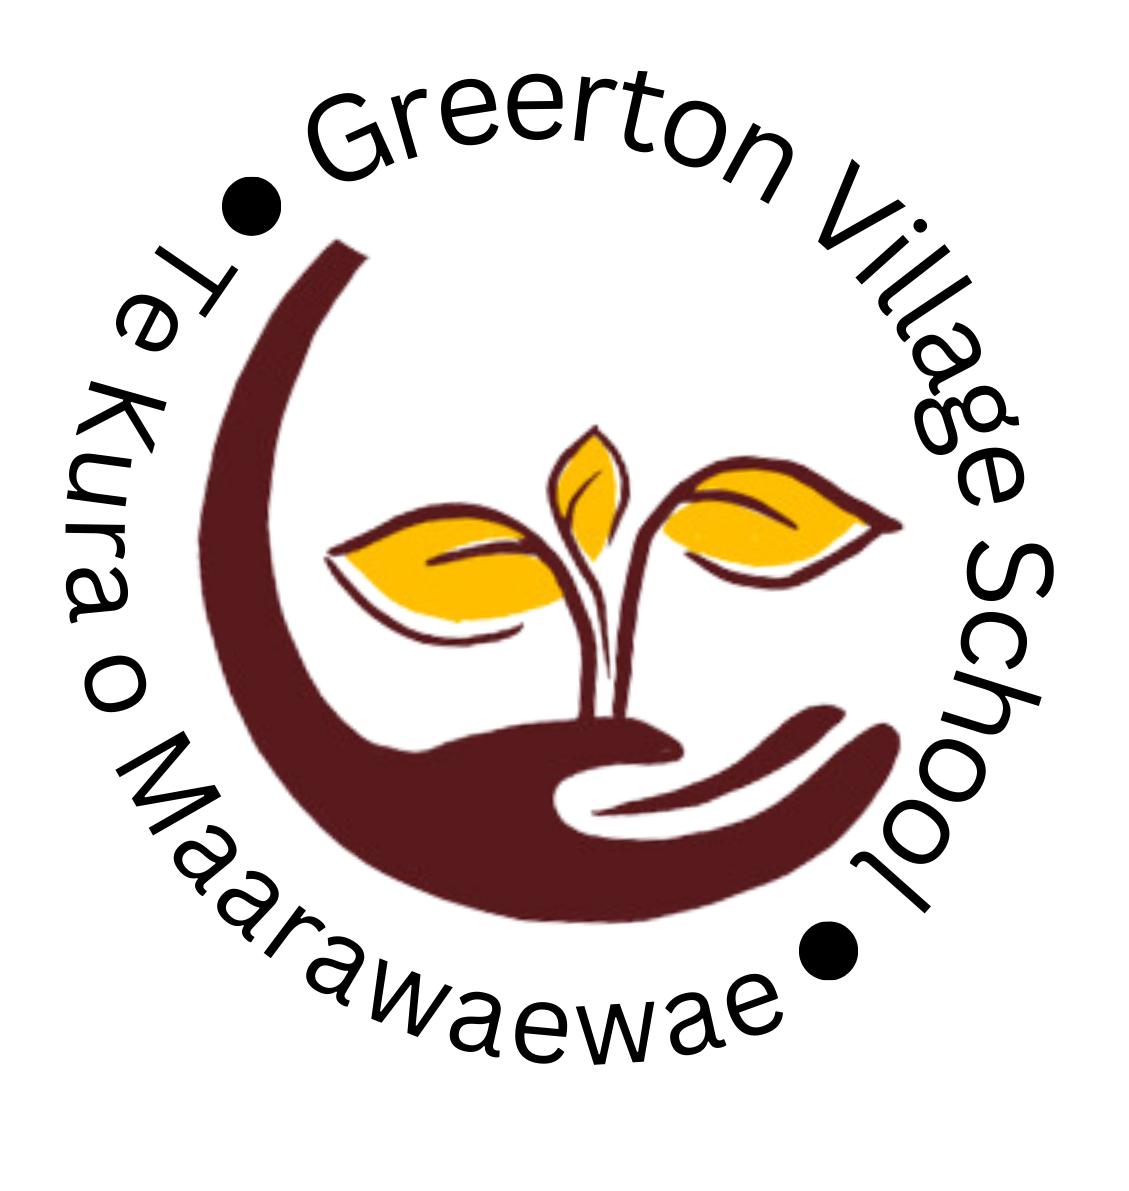 Greerton Village School – Te Kura o Maarawaewae